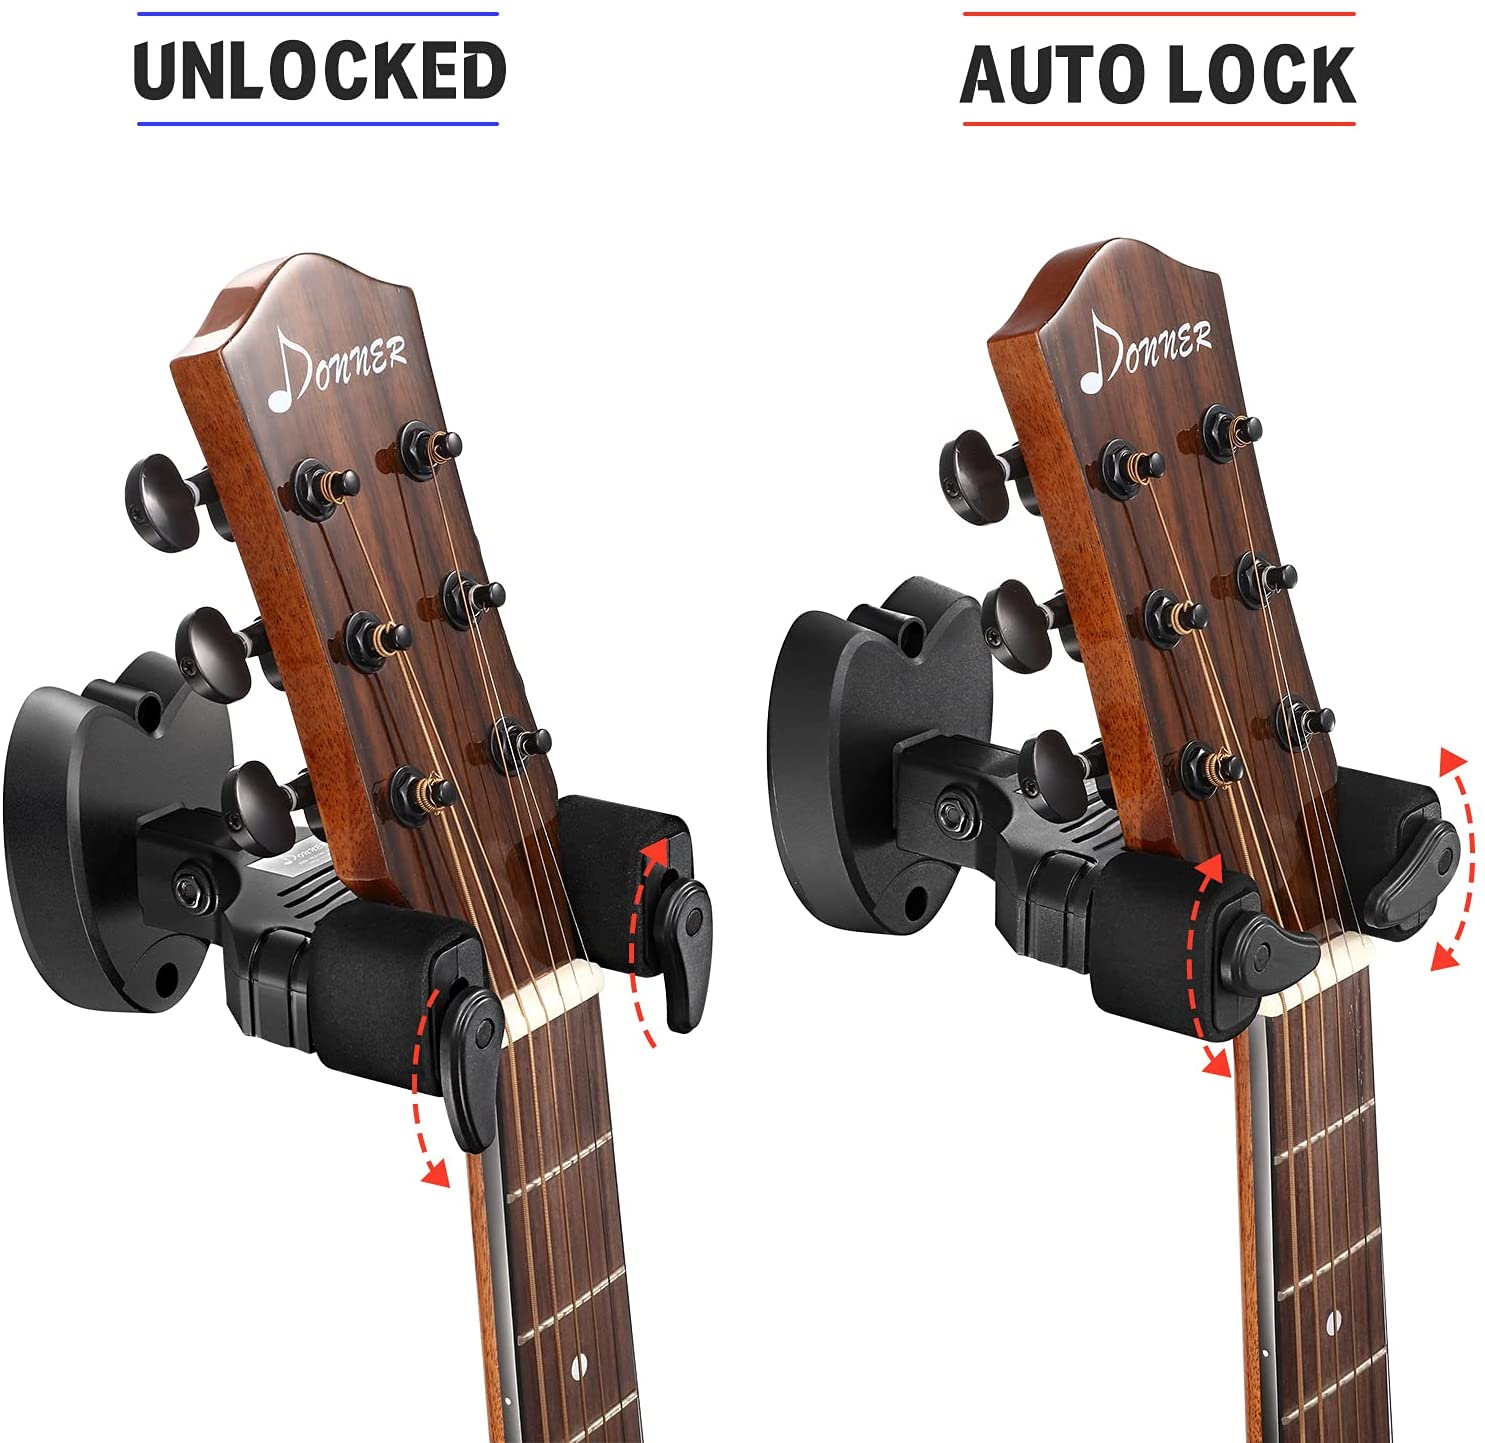 Donner Locking Guitar Wall Mount 1-Pack, Auto Lock Guitar Wall Hanger For Guitar Bass, Black